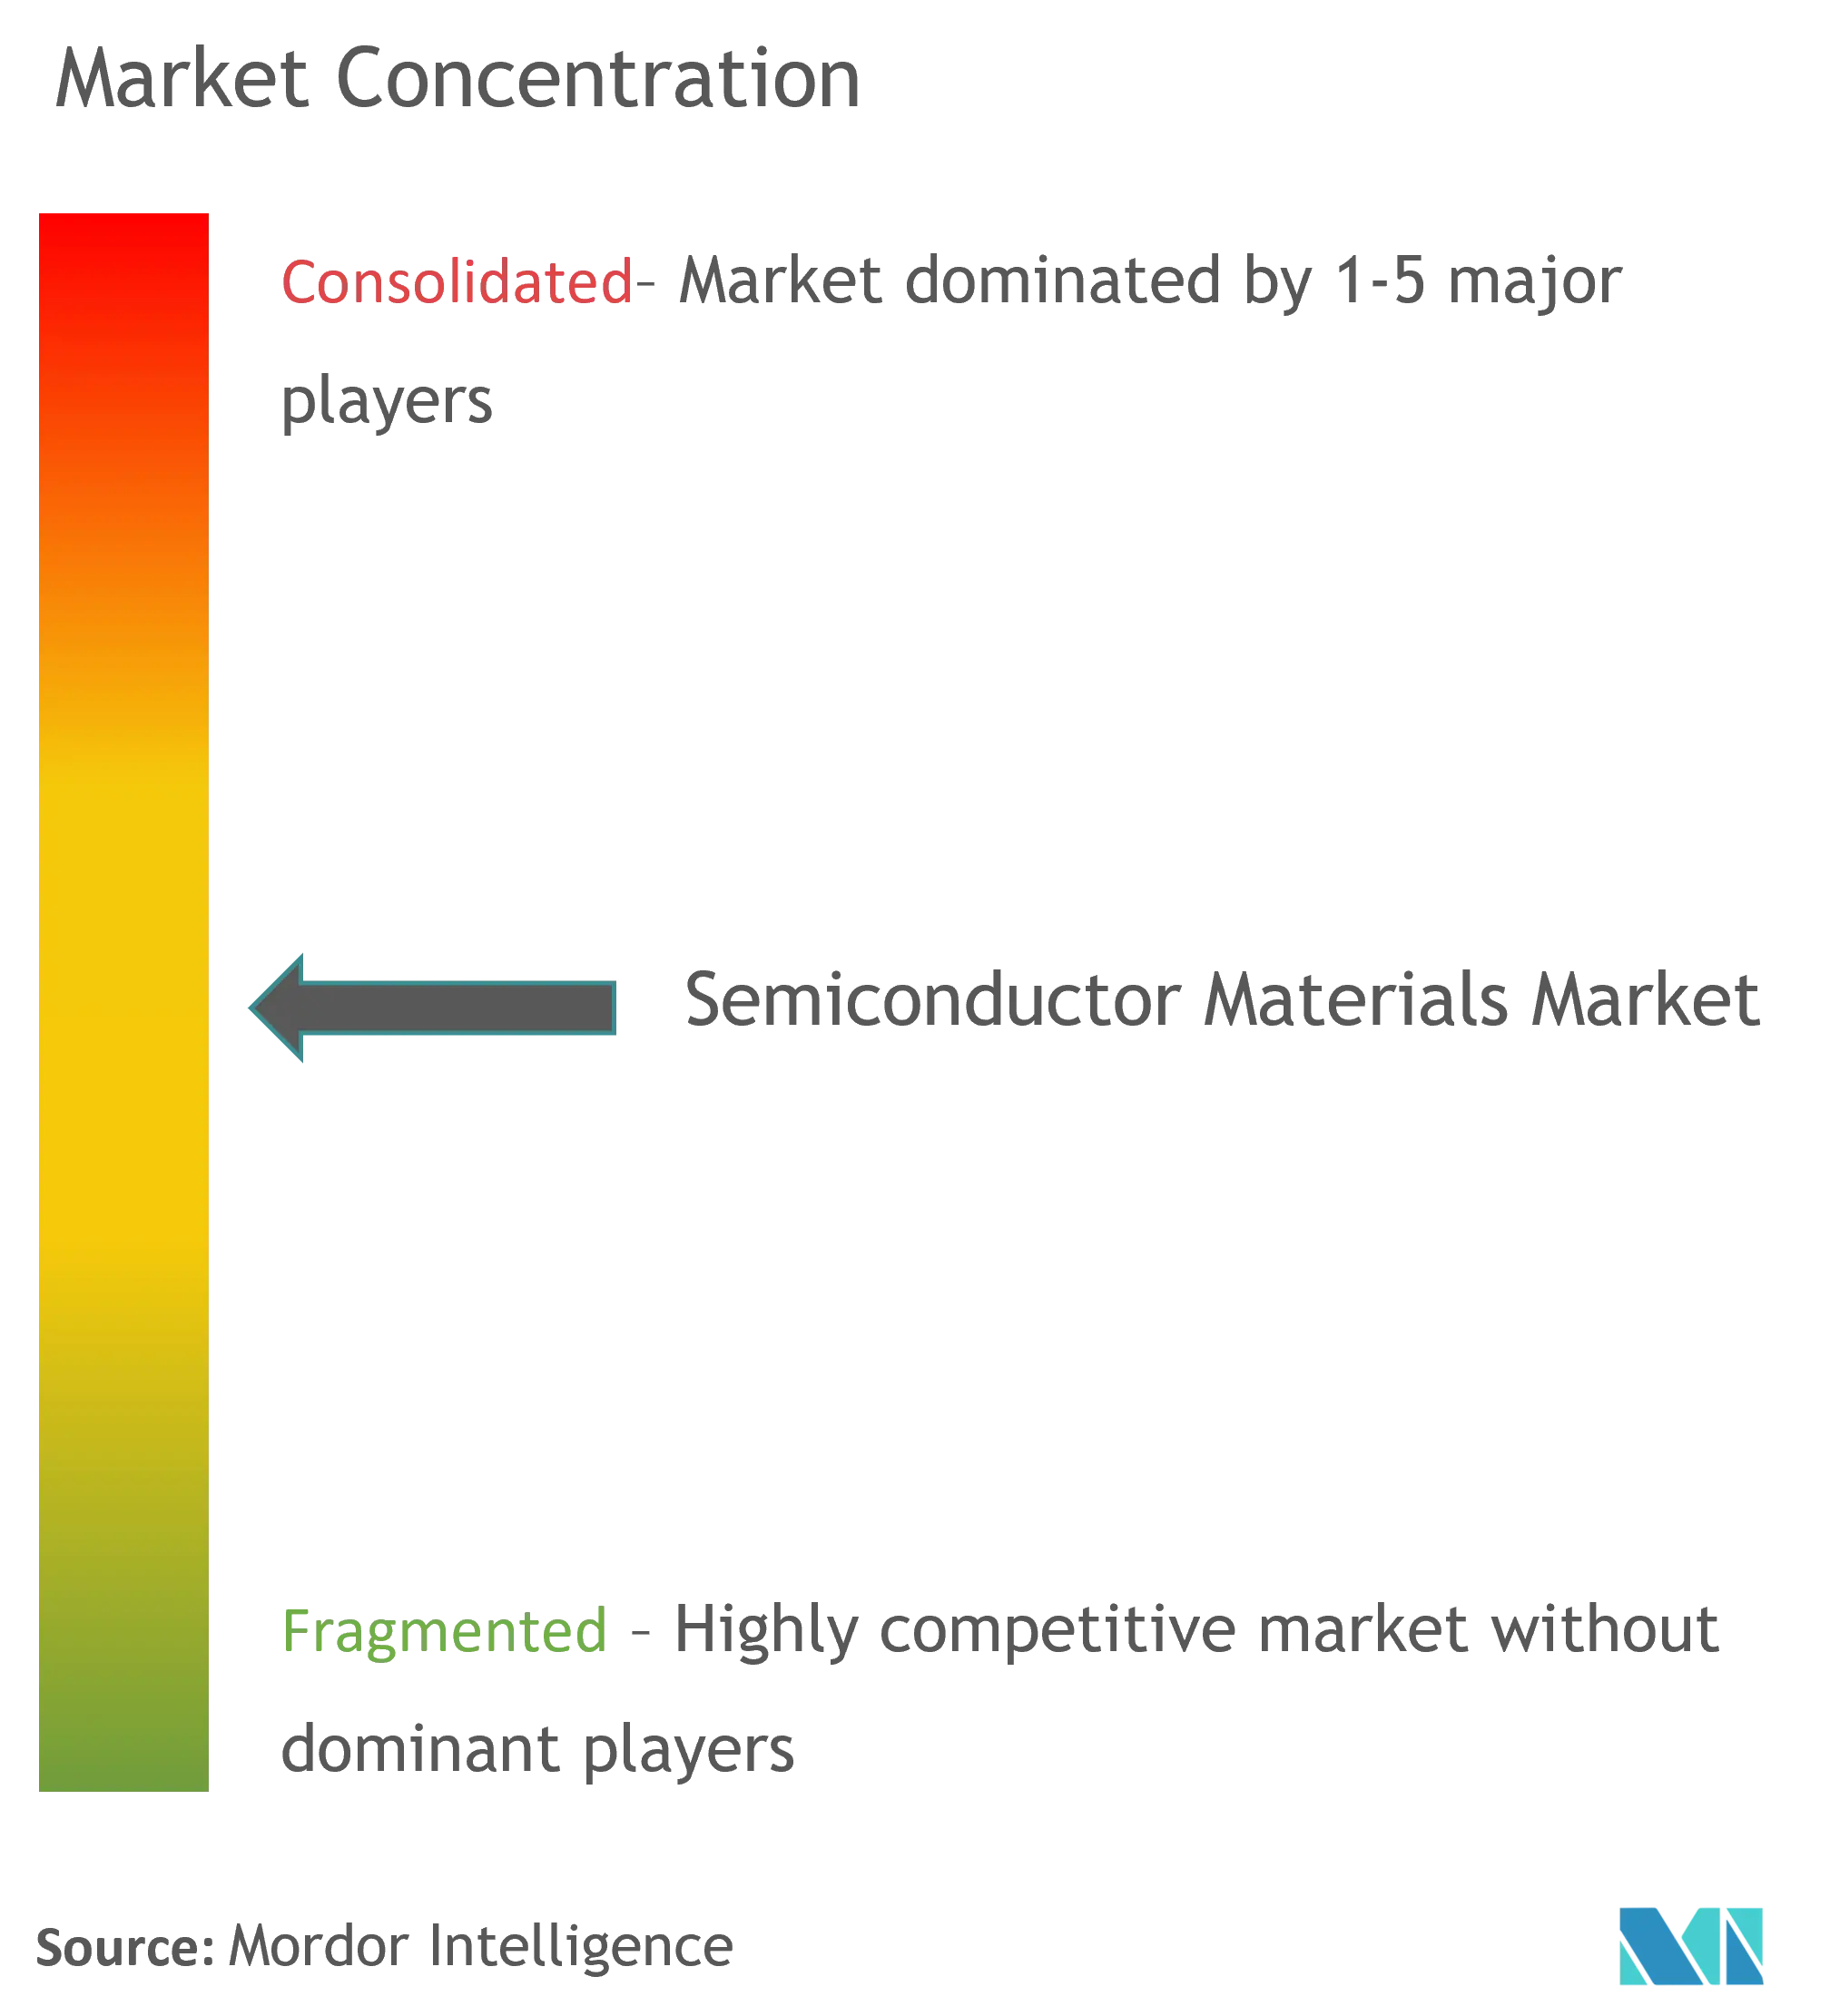 Semiconductors Materials Market Concentration